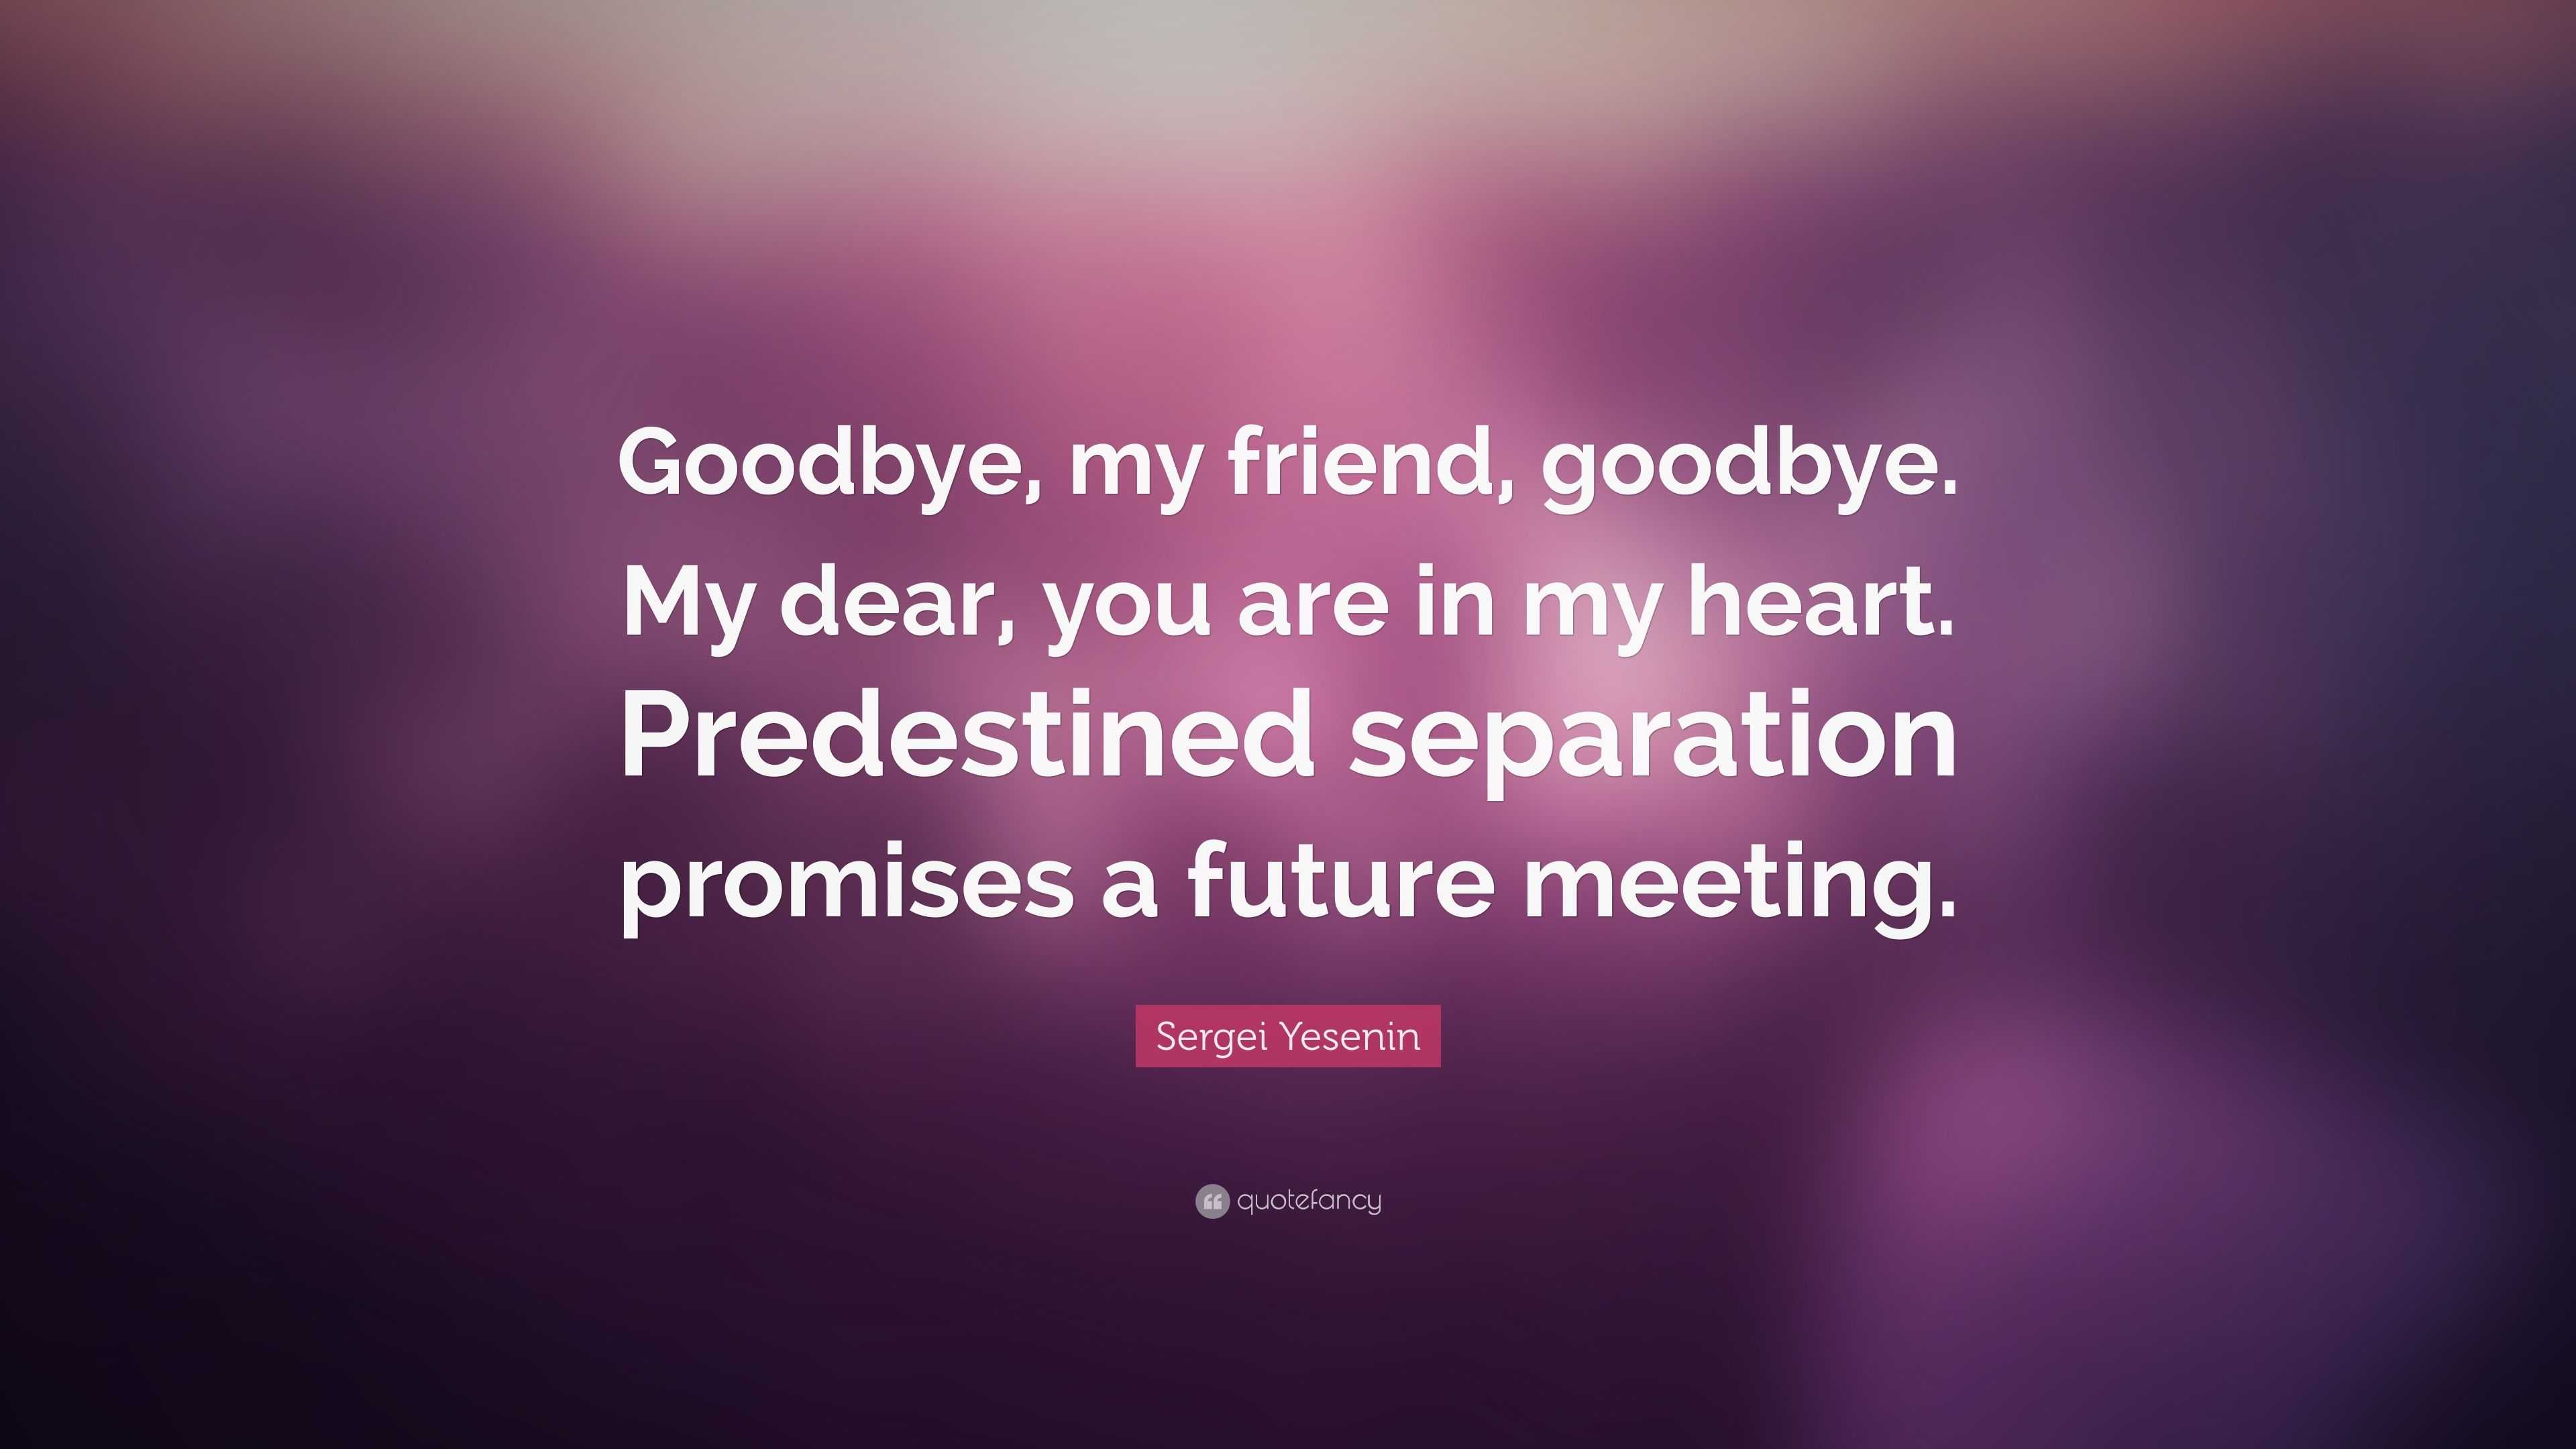 Sergei Yesenin Quote: “Goodbye, my friend, goodbye. My dear, you are in ...